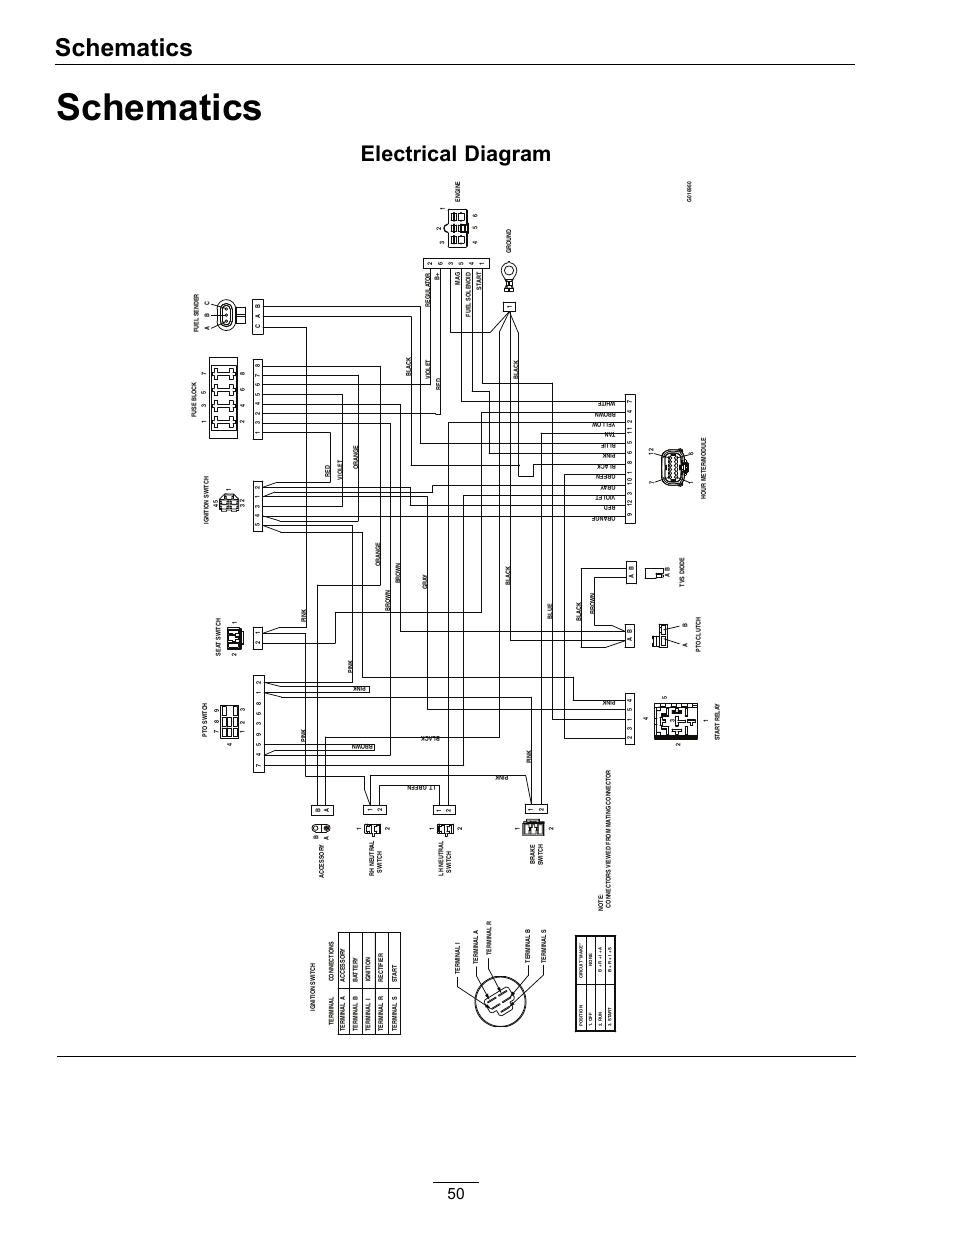 2000 tahoe by thor 21 ft wiring diagram